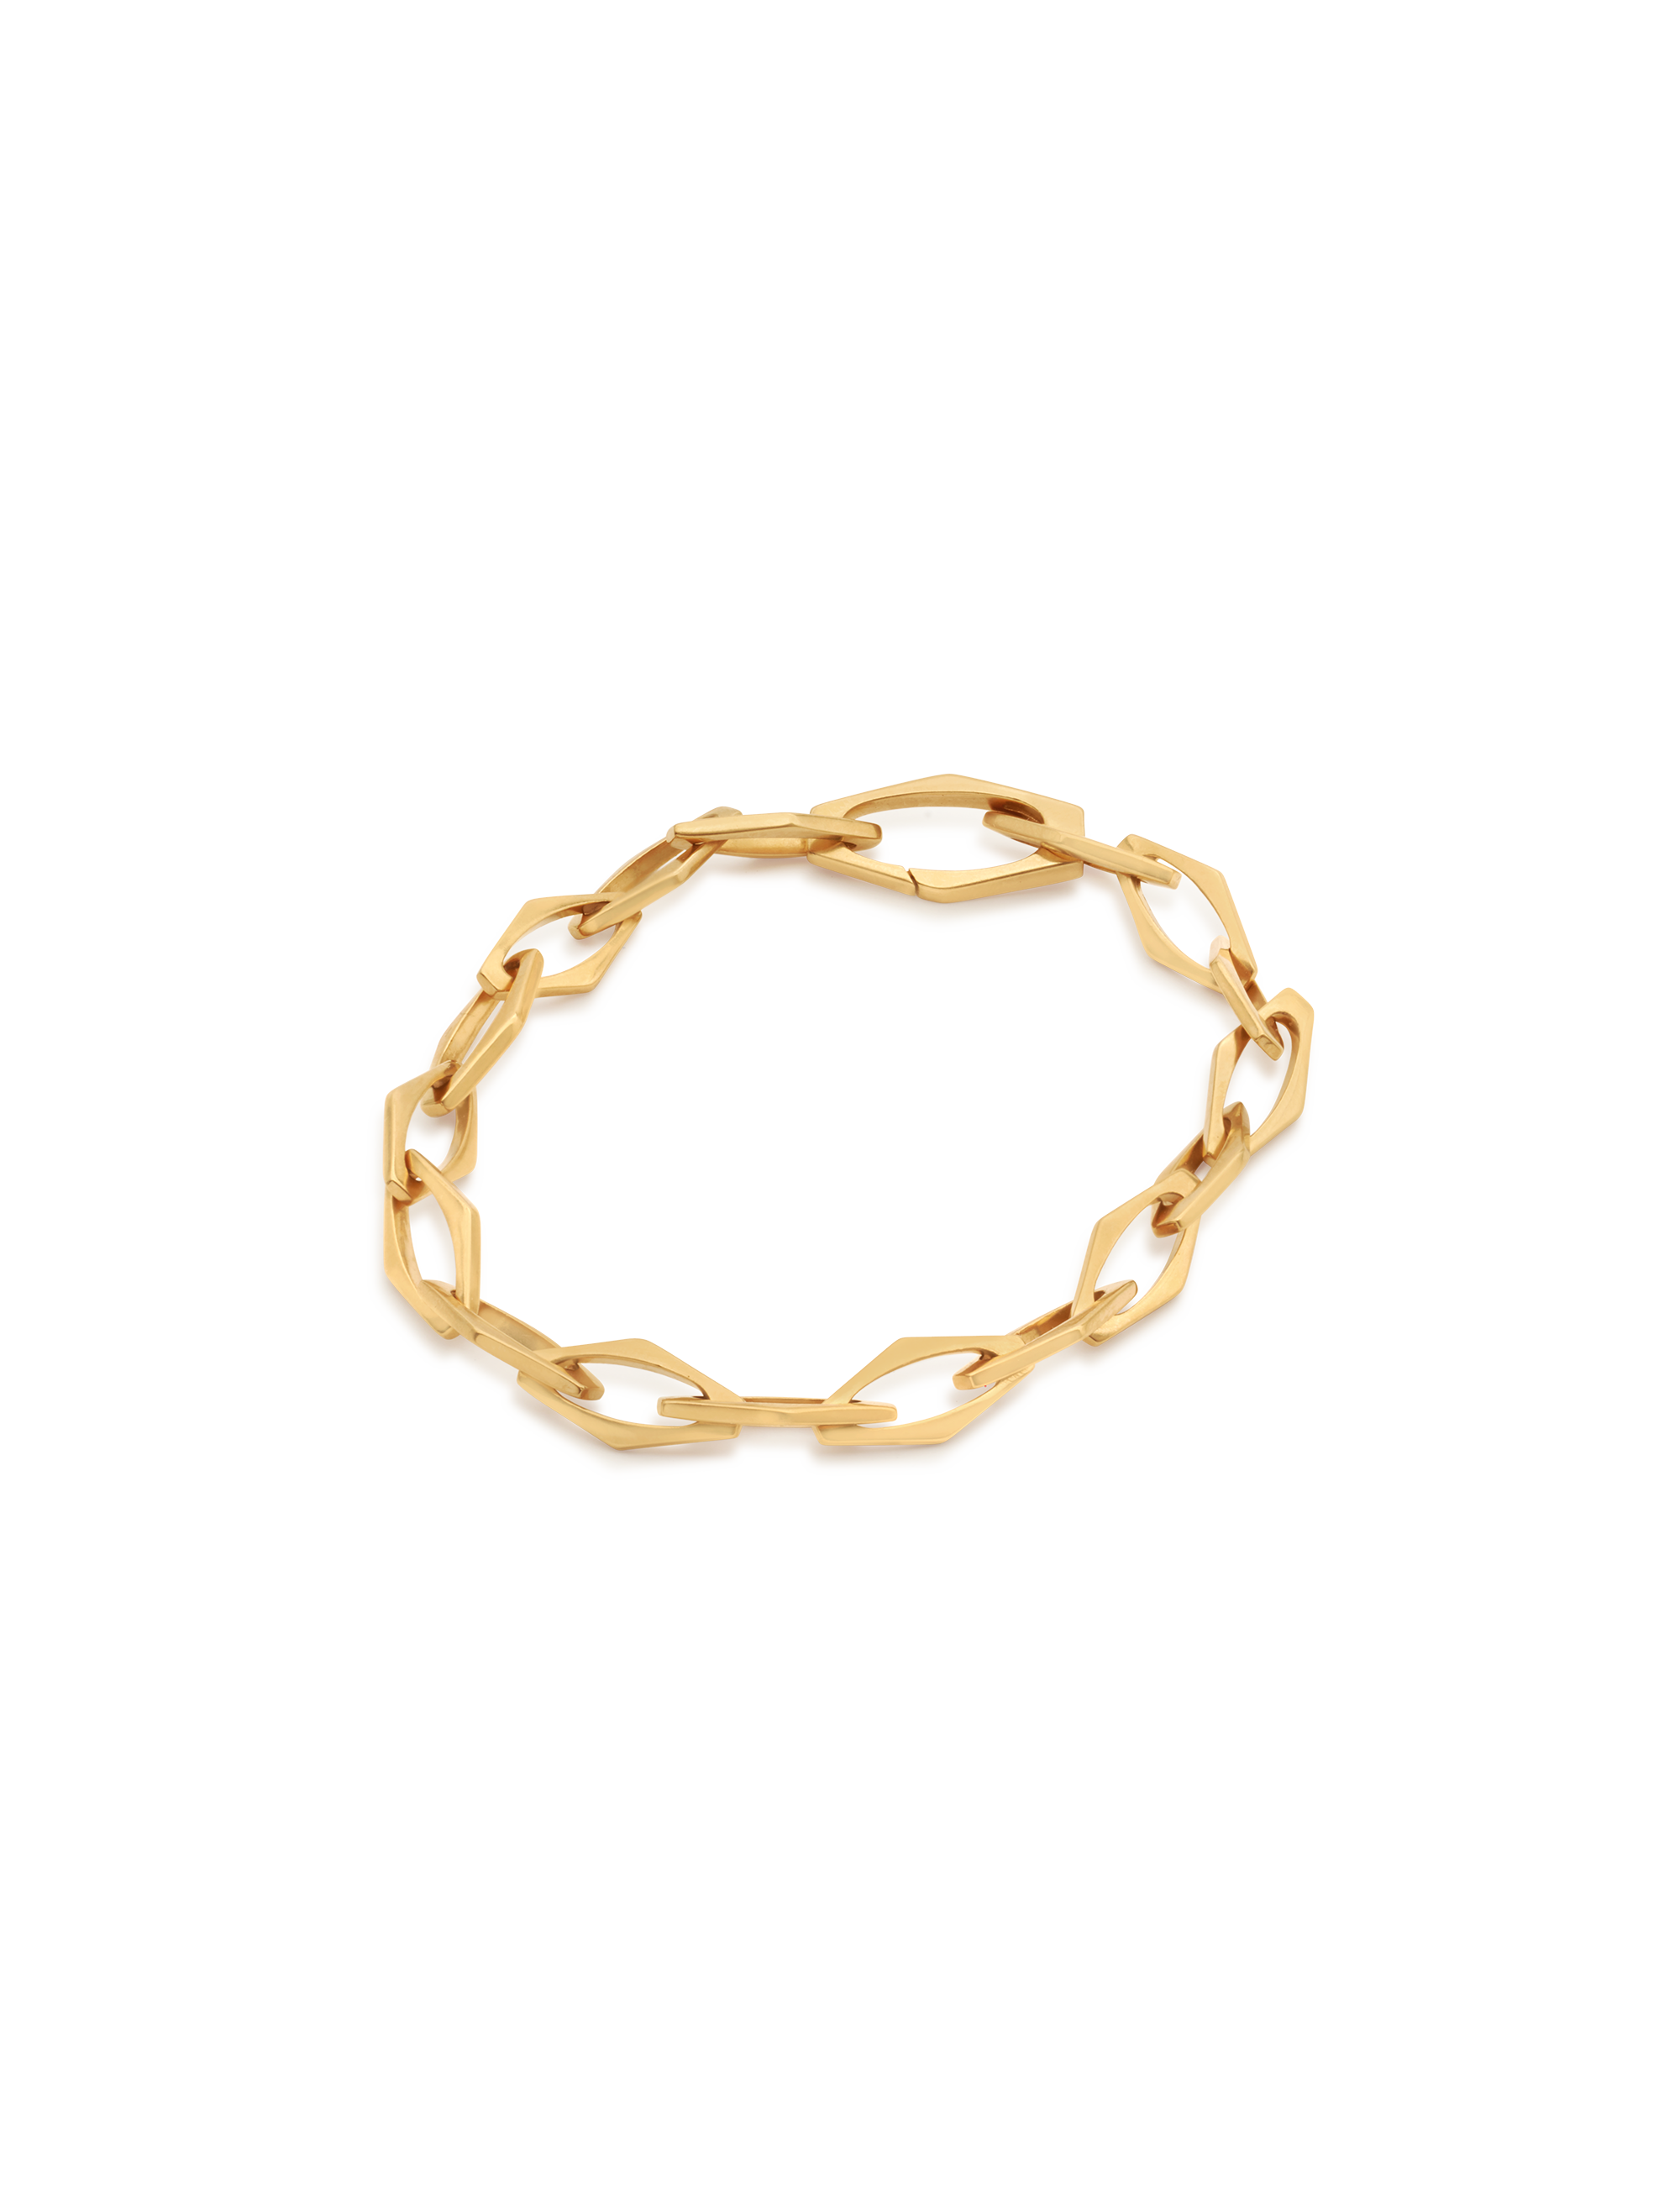 Small Hex Link Bracelet